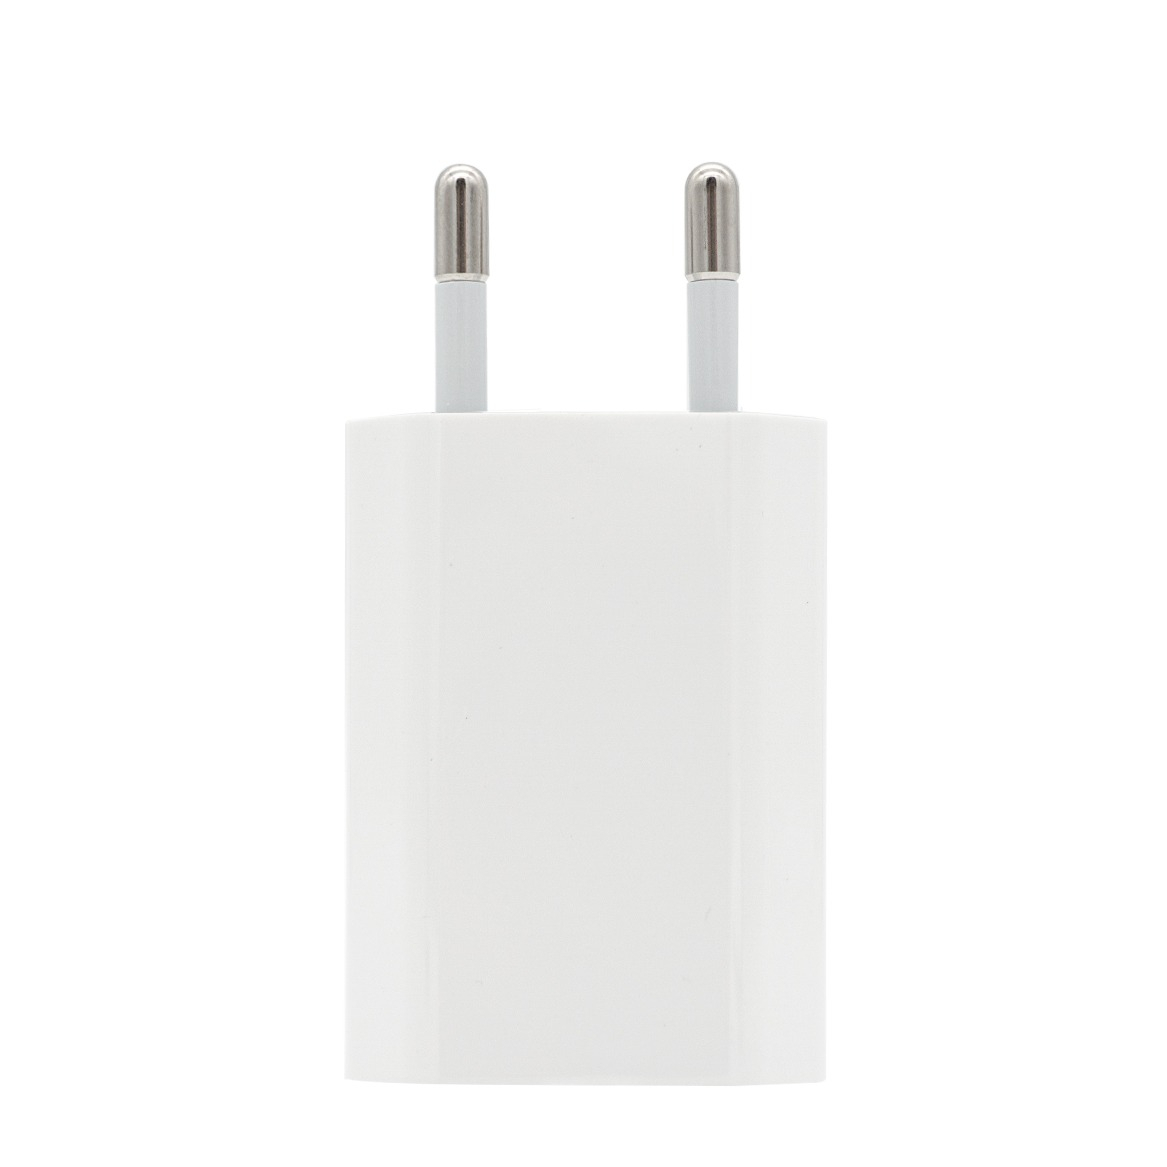 Image of Apple - iPhone SE (2020) Ladegerät / USB Netzteil 5W A1400 MD813ZM/A - Weiss bei Apfelkiste.ch